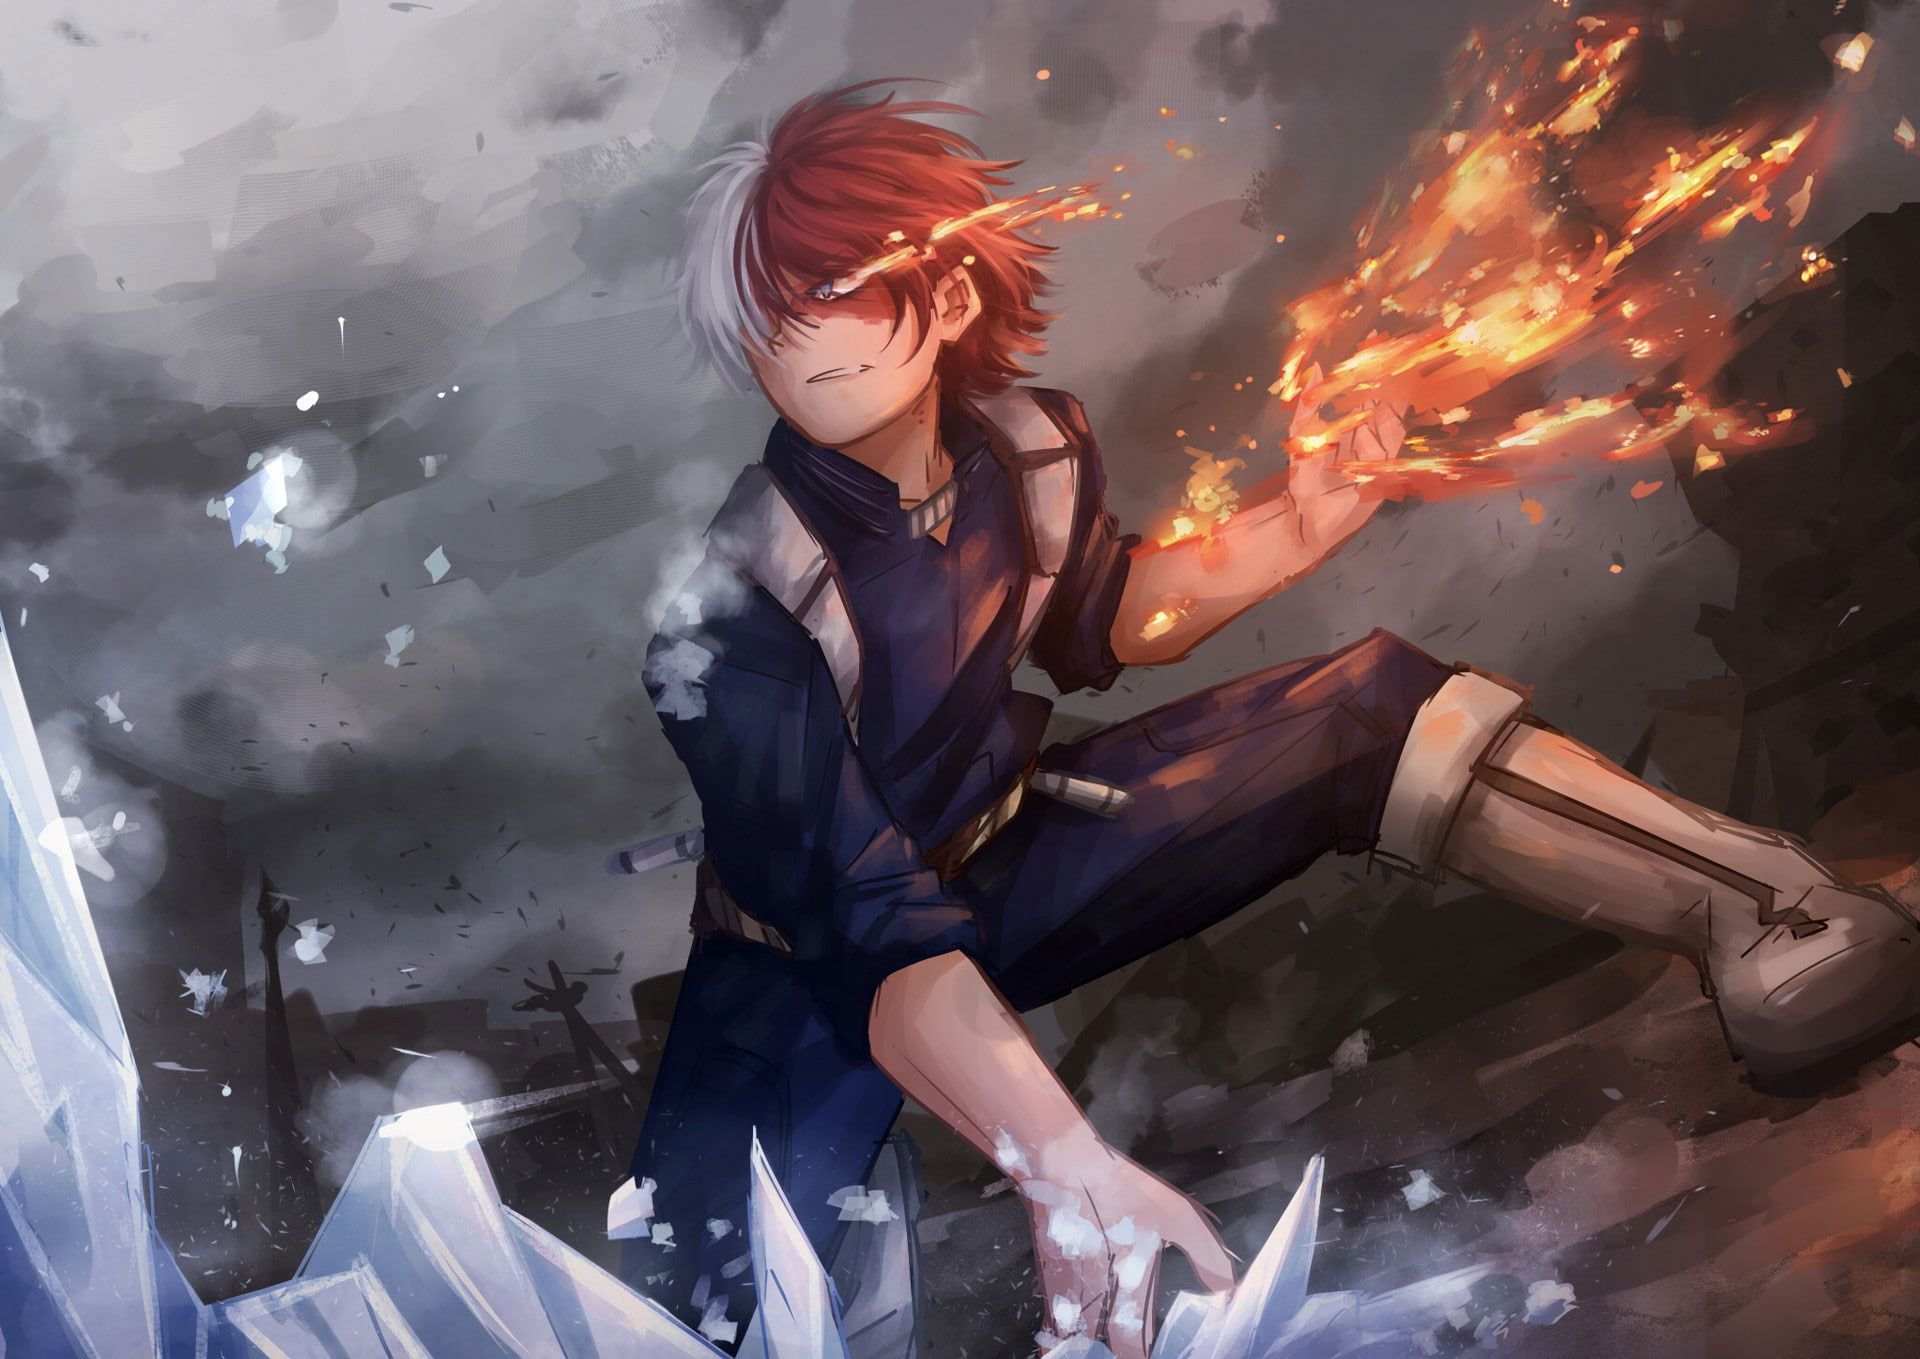 Anime boy with fire in his hands wallpaper - Shoto Todoroki, My Hero Academia